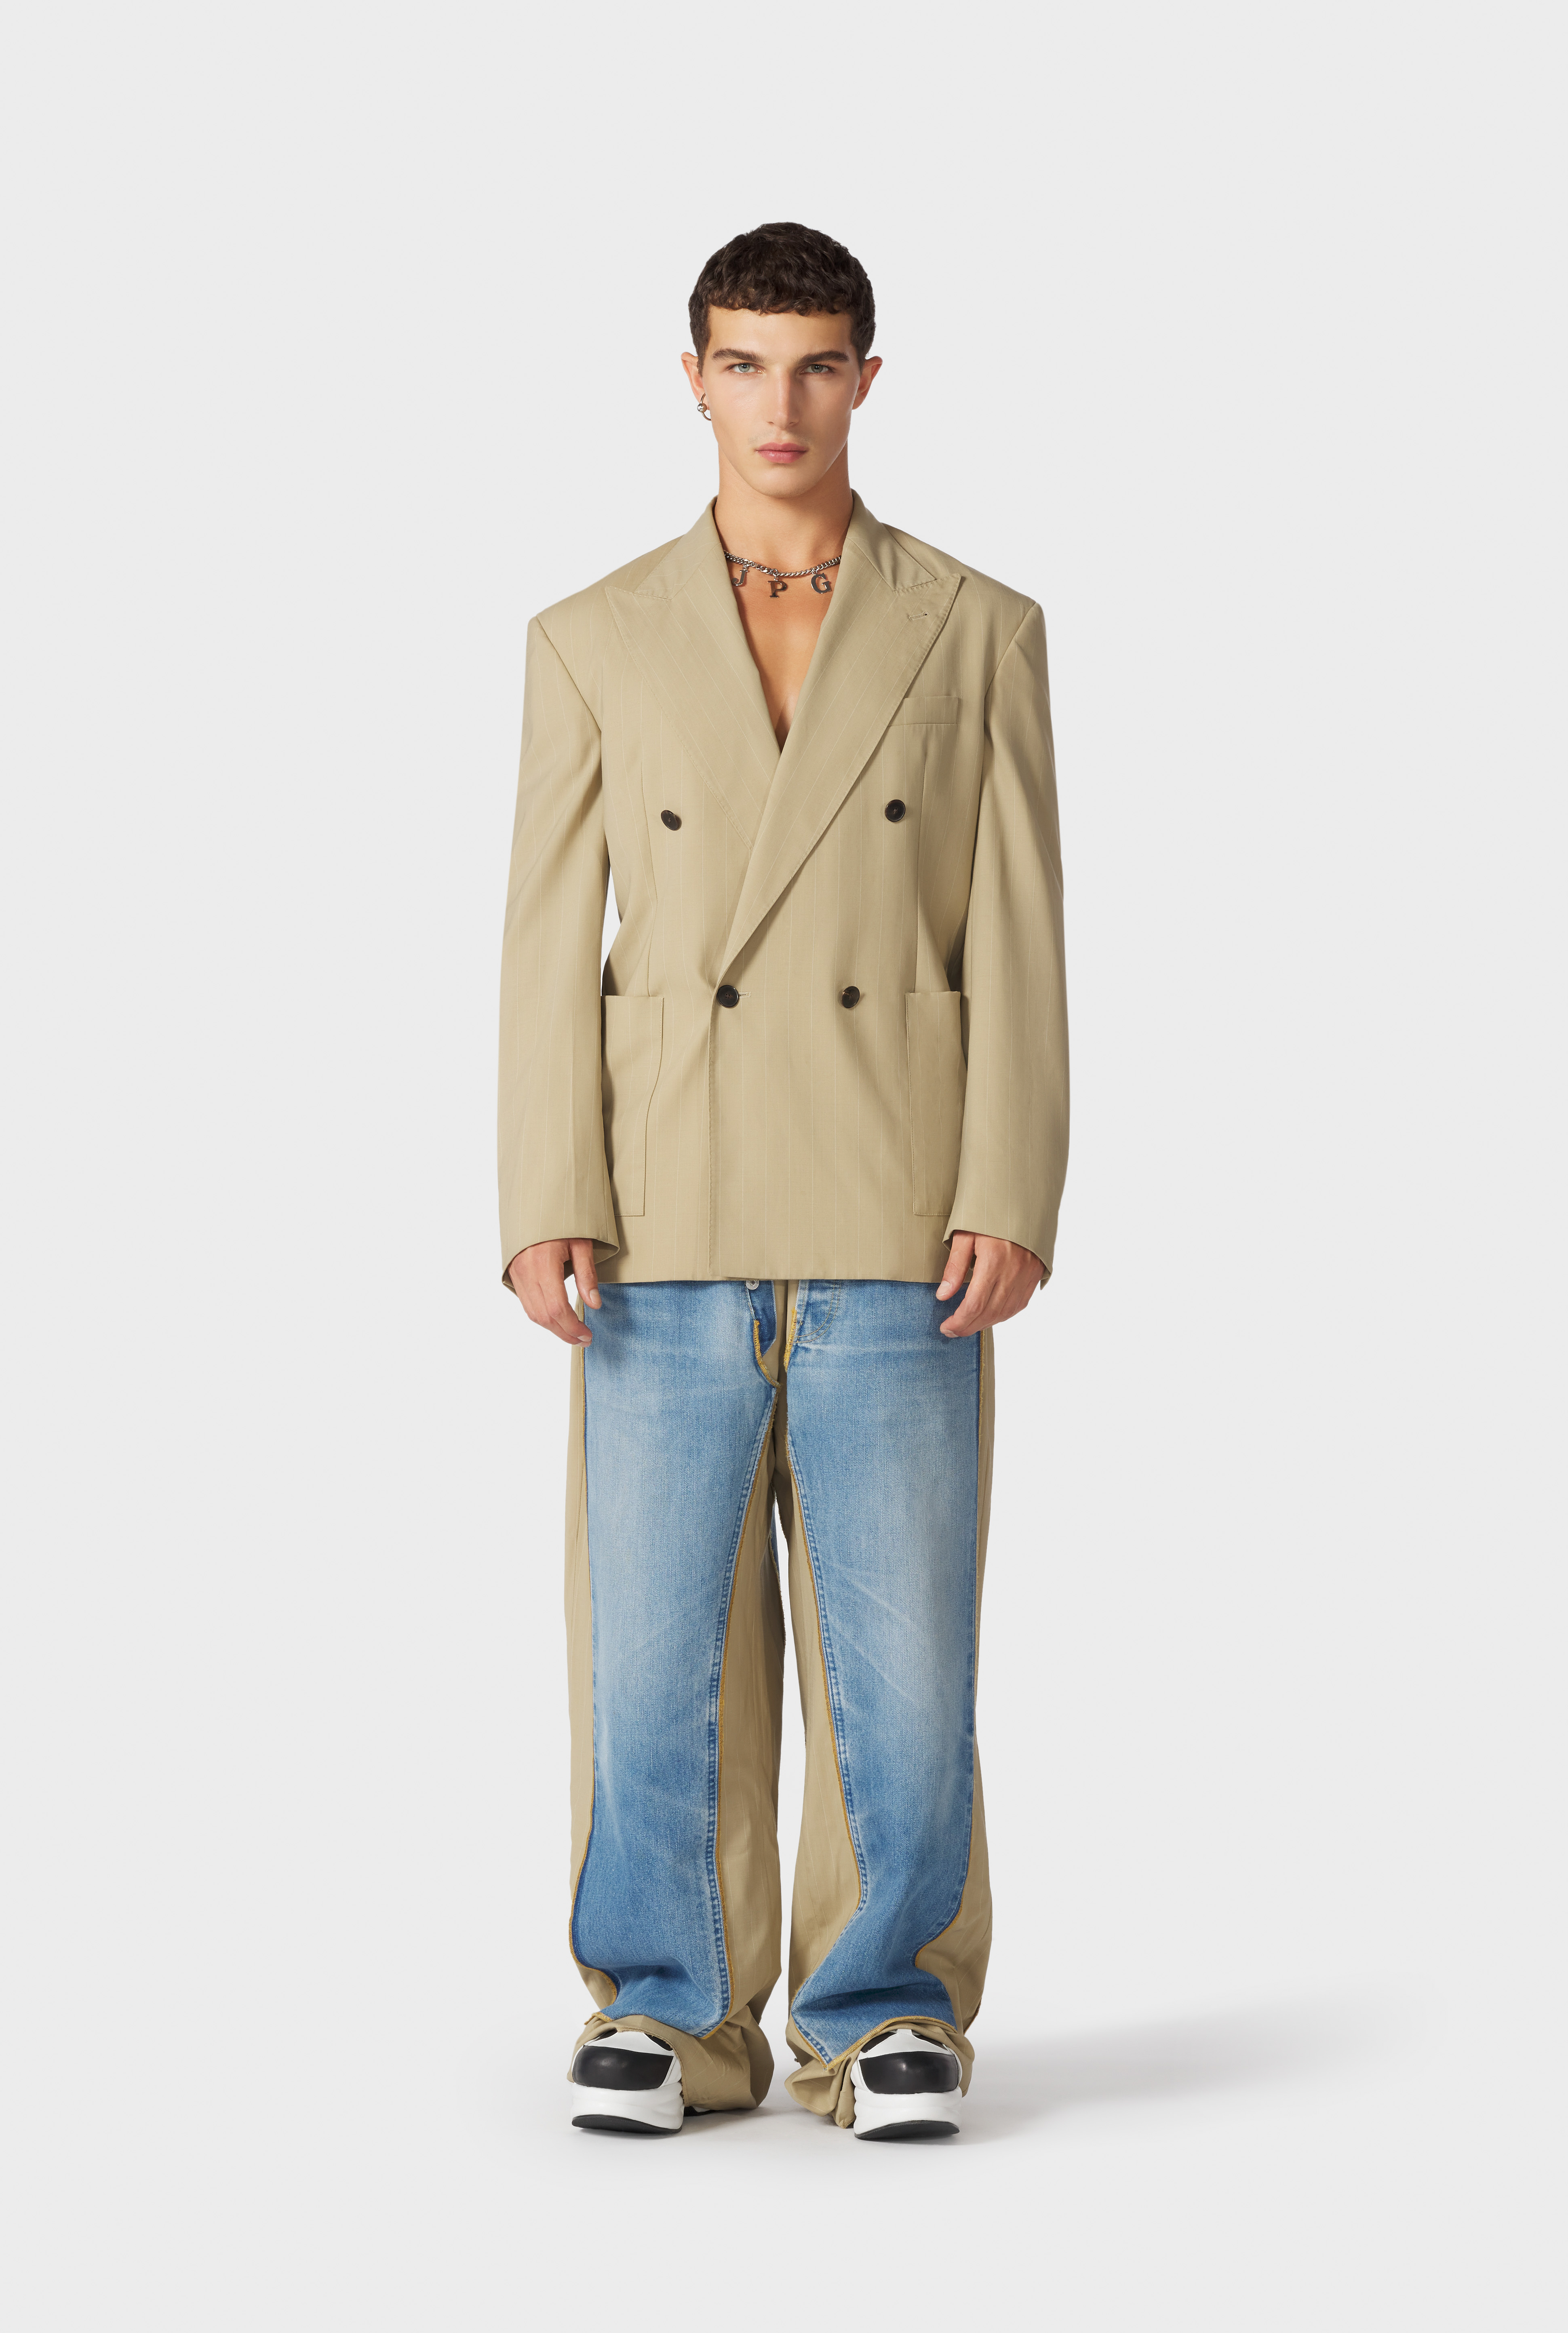 Jean Paul Gaultier - Coats and Jackets | Jean Paul Gaultier